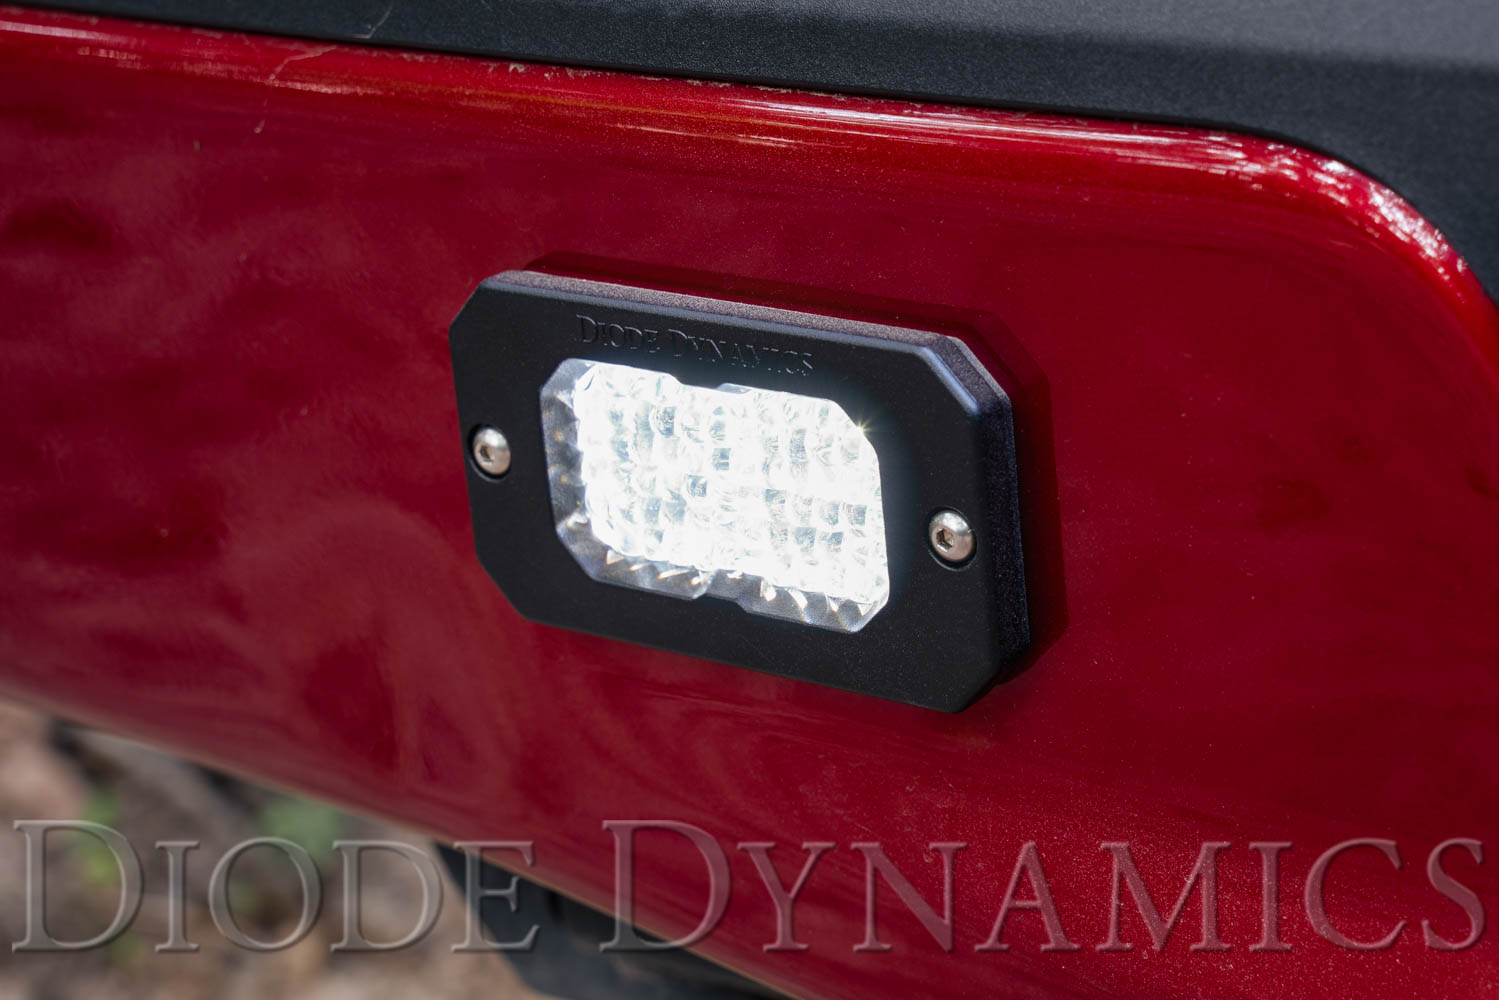 Diode Dynamics Stage Series 2 Inch LED Pod, Sport White Flood Flush WBL Pair